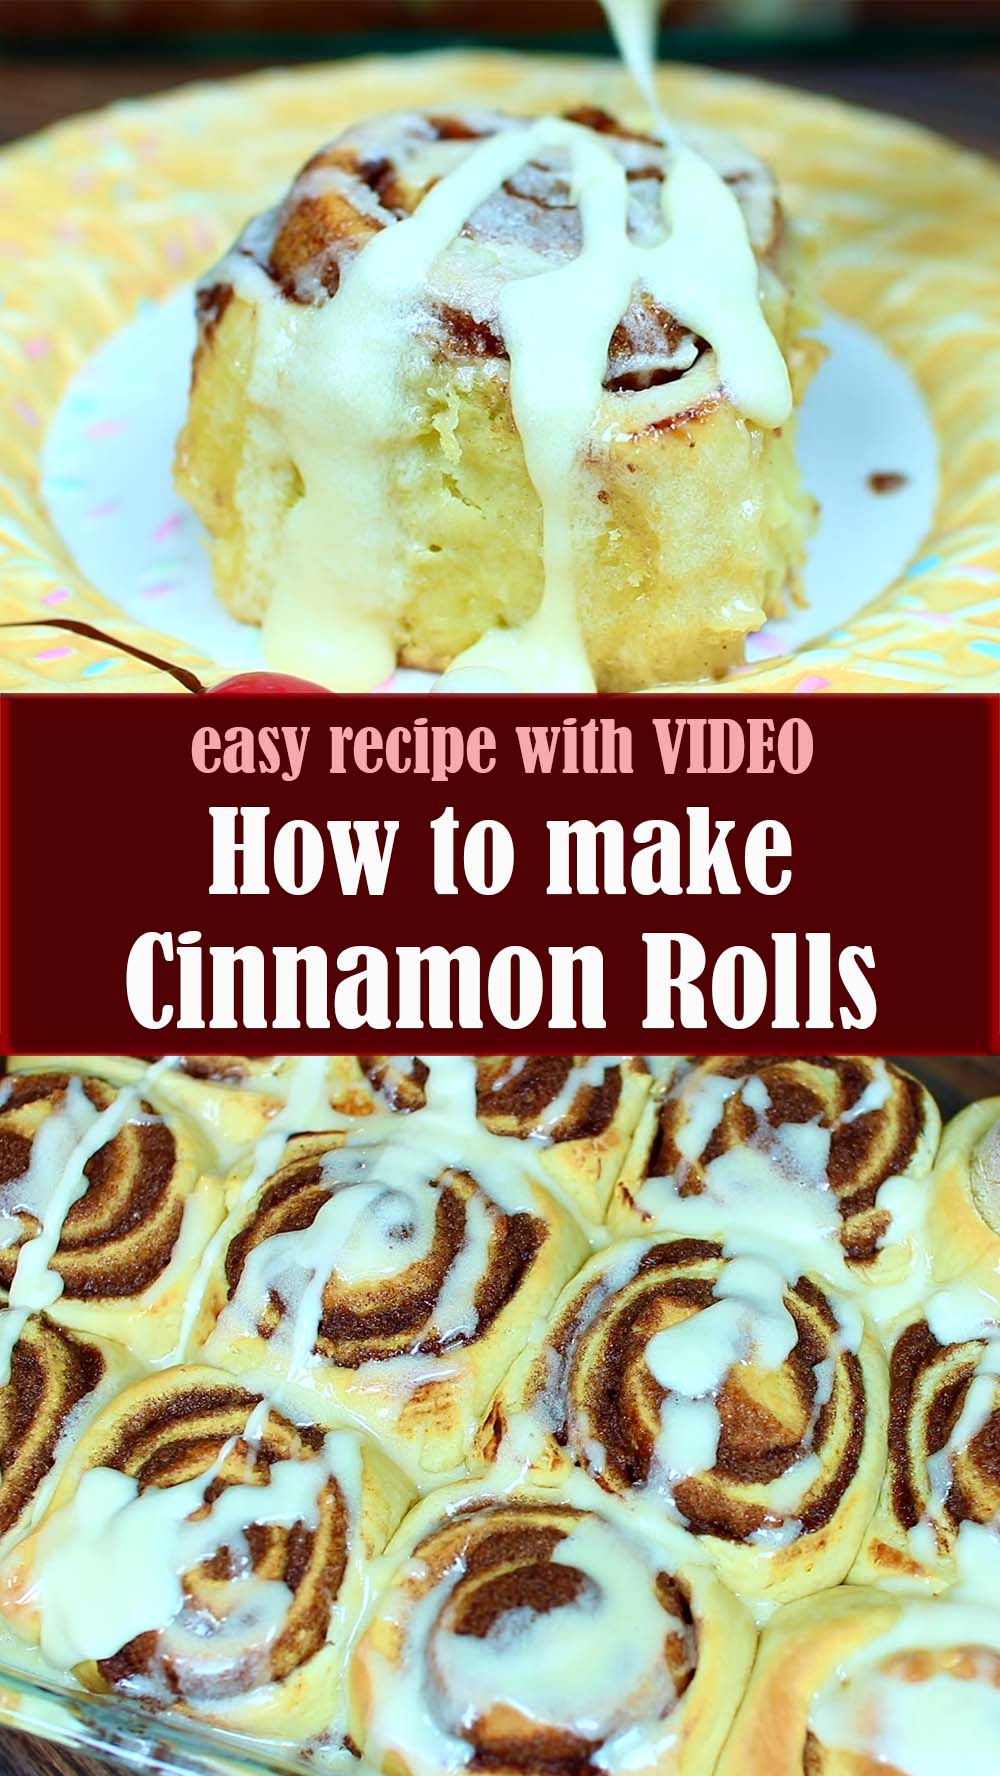 How to make Cinnamon Rolls